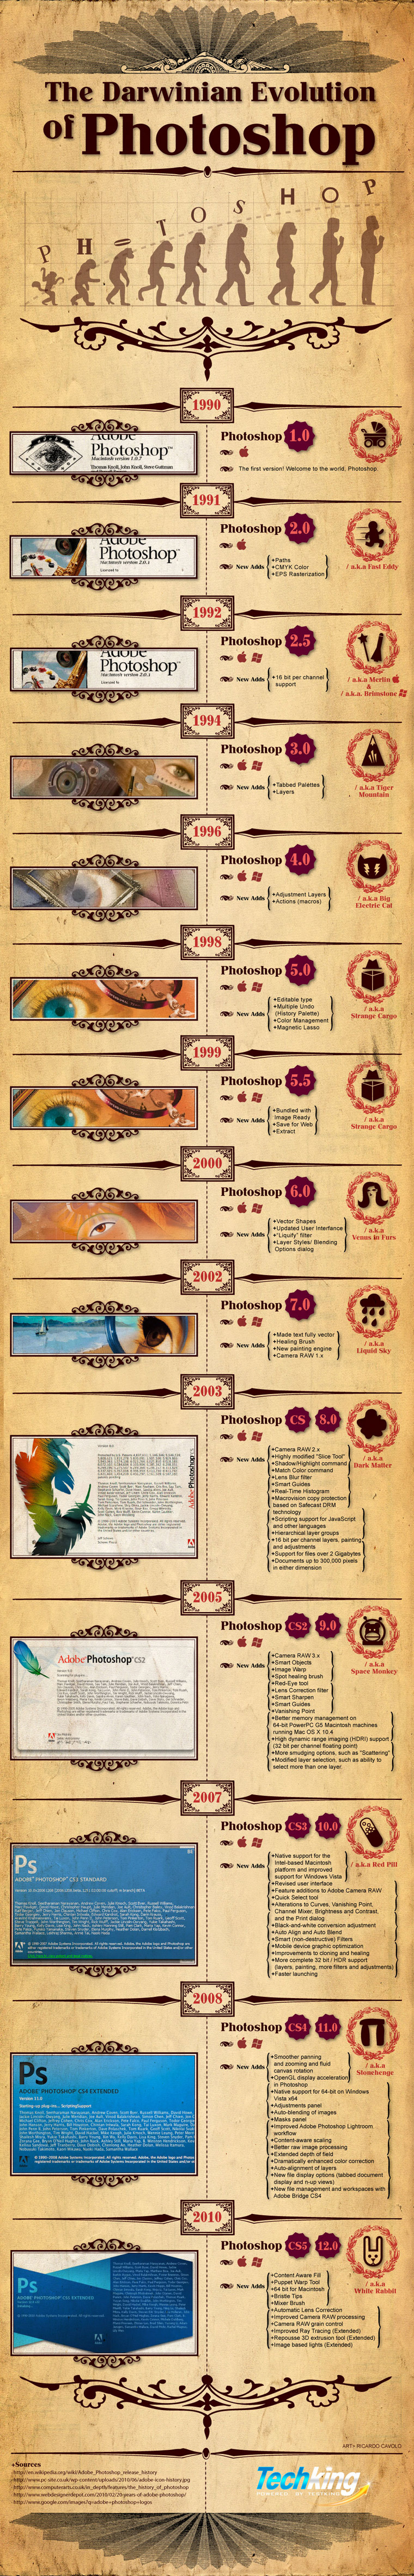 The Darwinian Evolution of Photoshop - Infographic